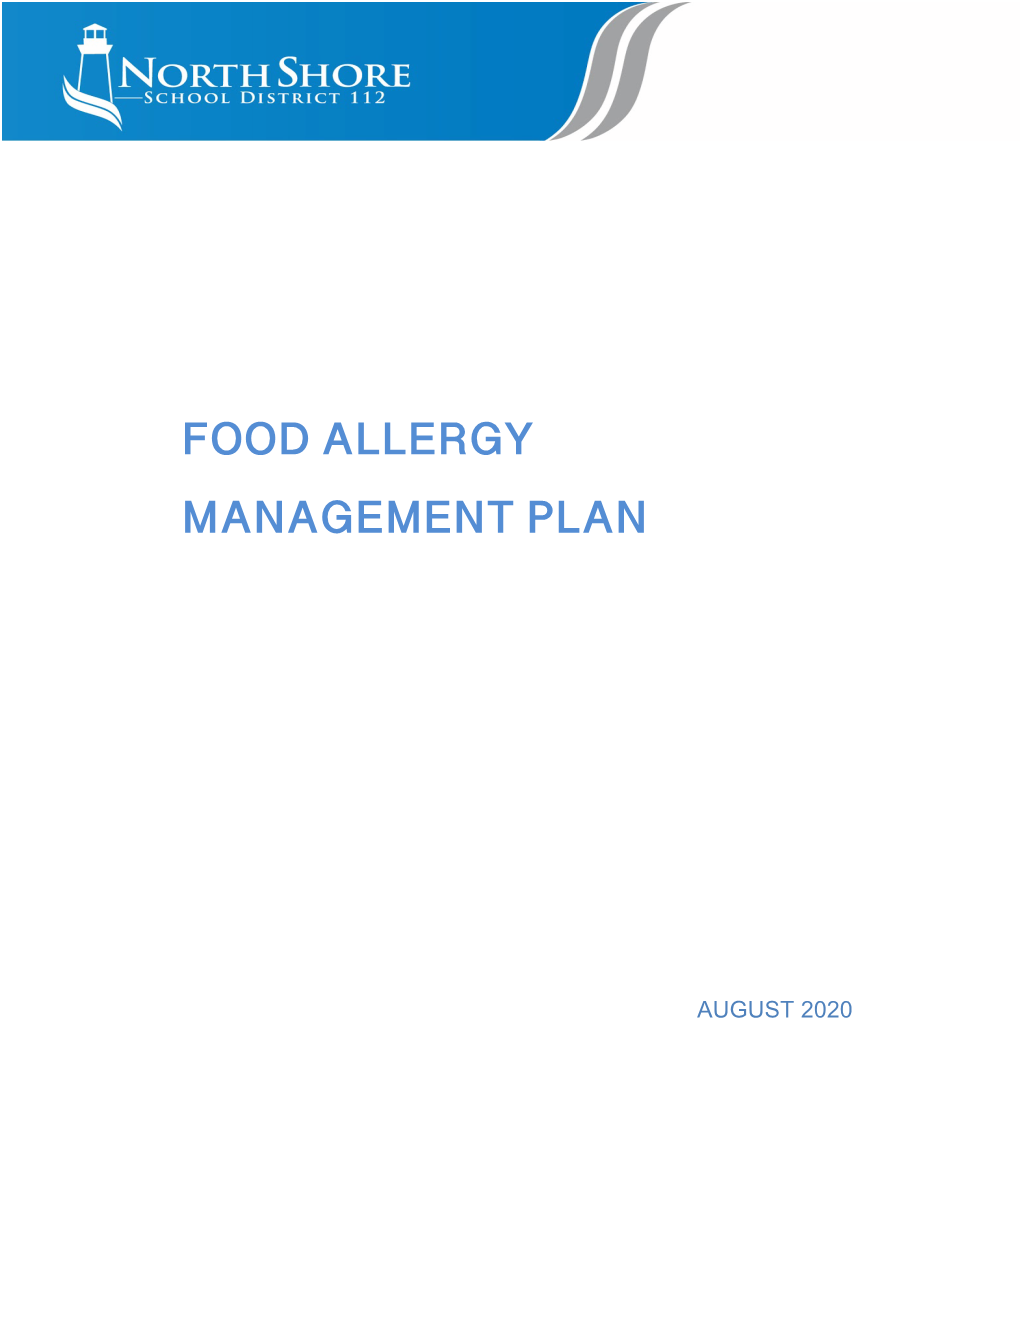 Food & Allergy Management Plan